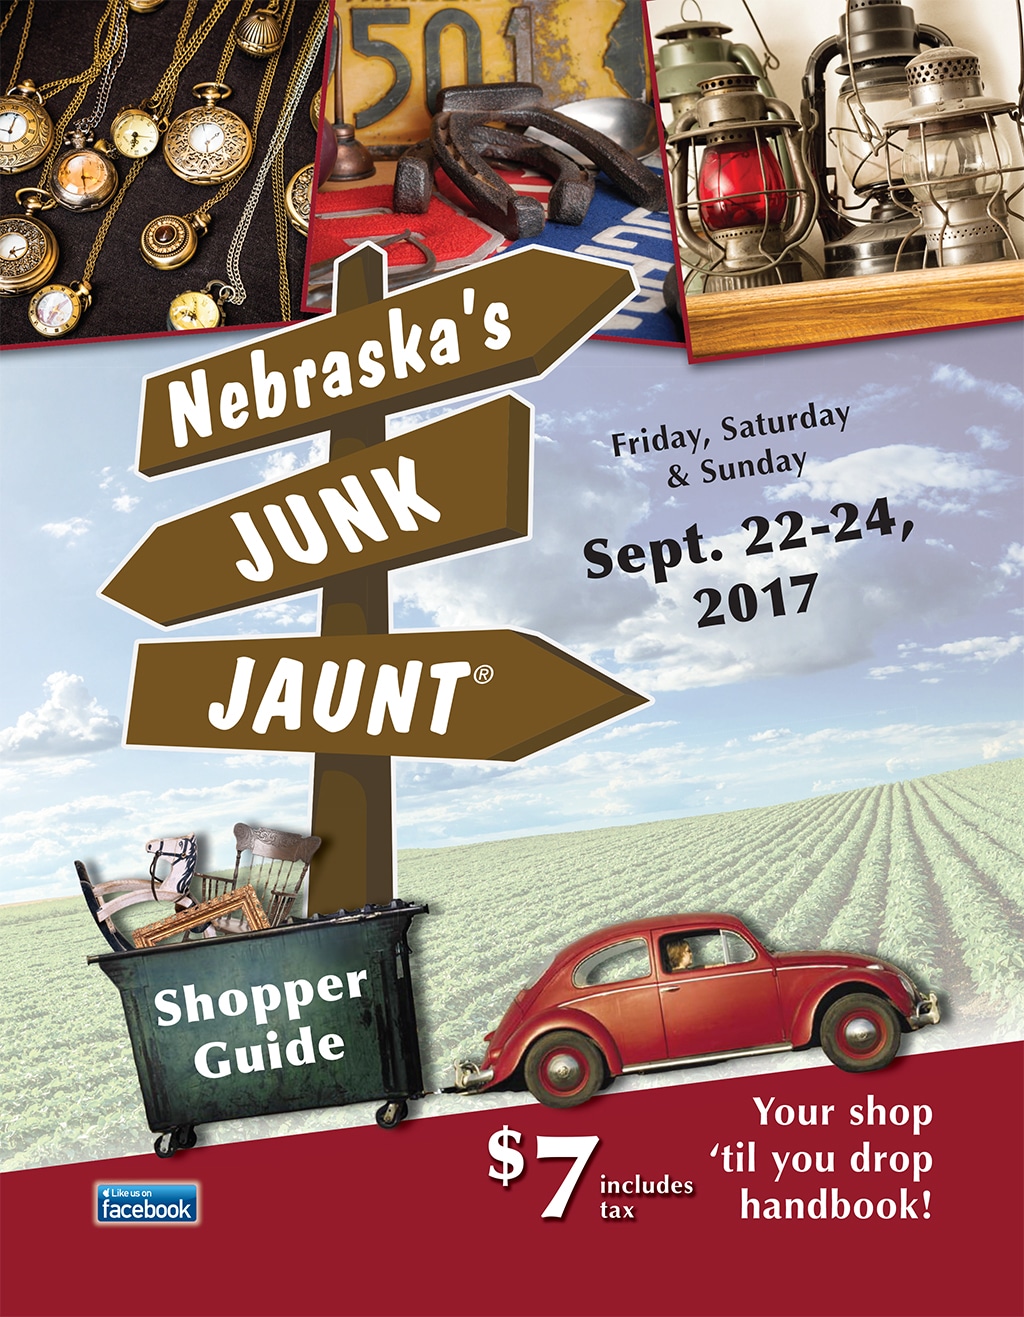 Shopper Guide Locations Nebraska's Junk Jaunt